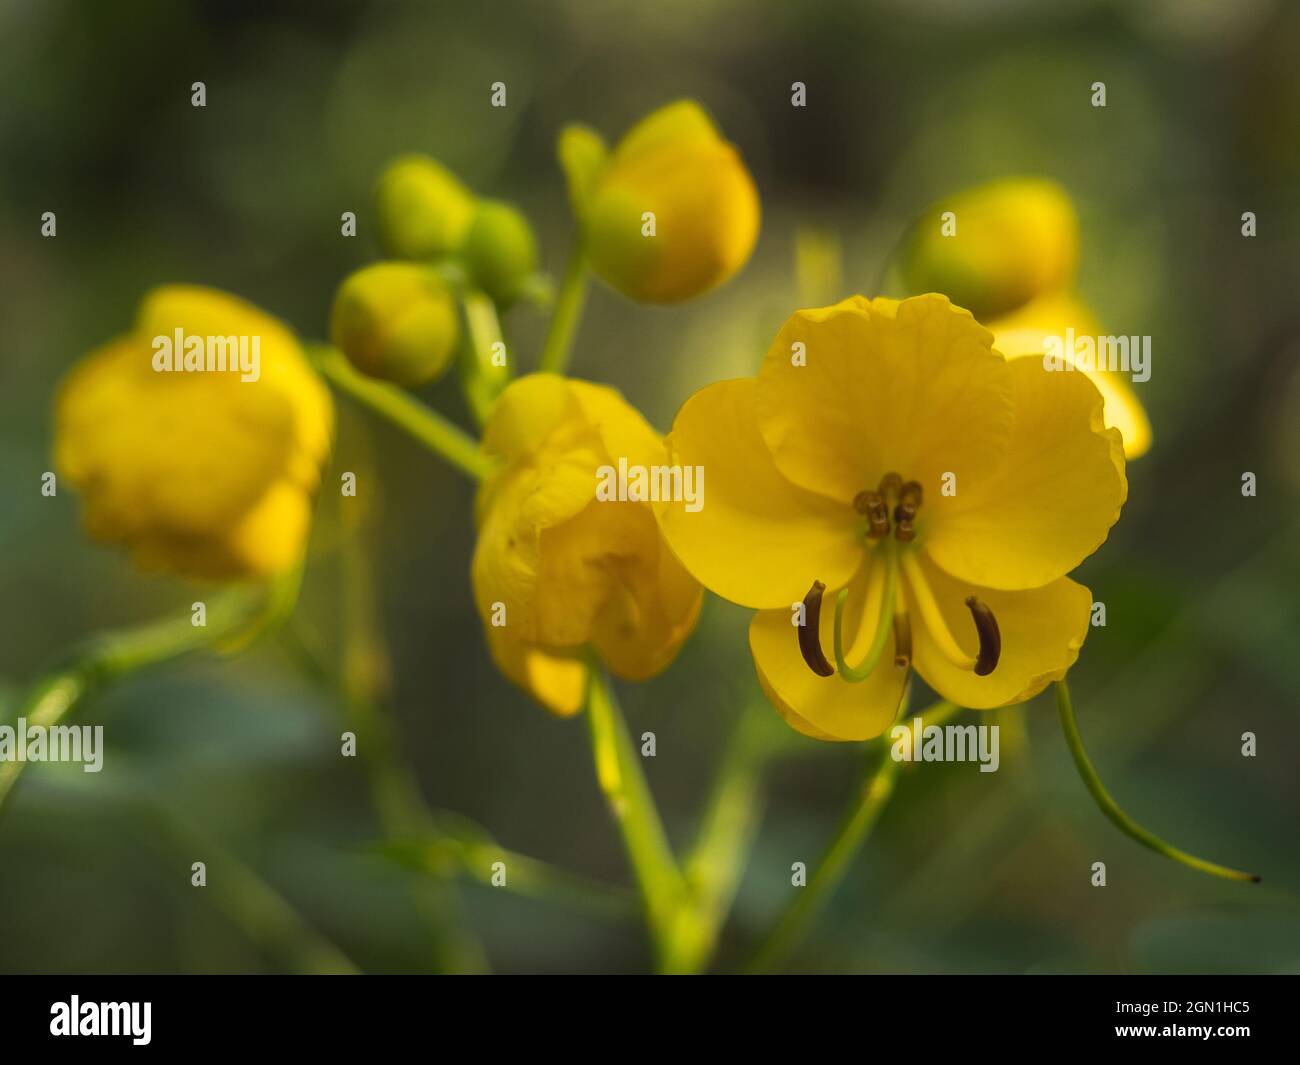 Closeup shot of yellow Cassia floribunda flowers on a blurred background Stock Photo